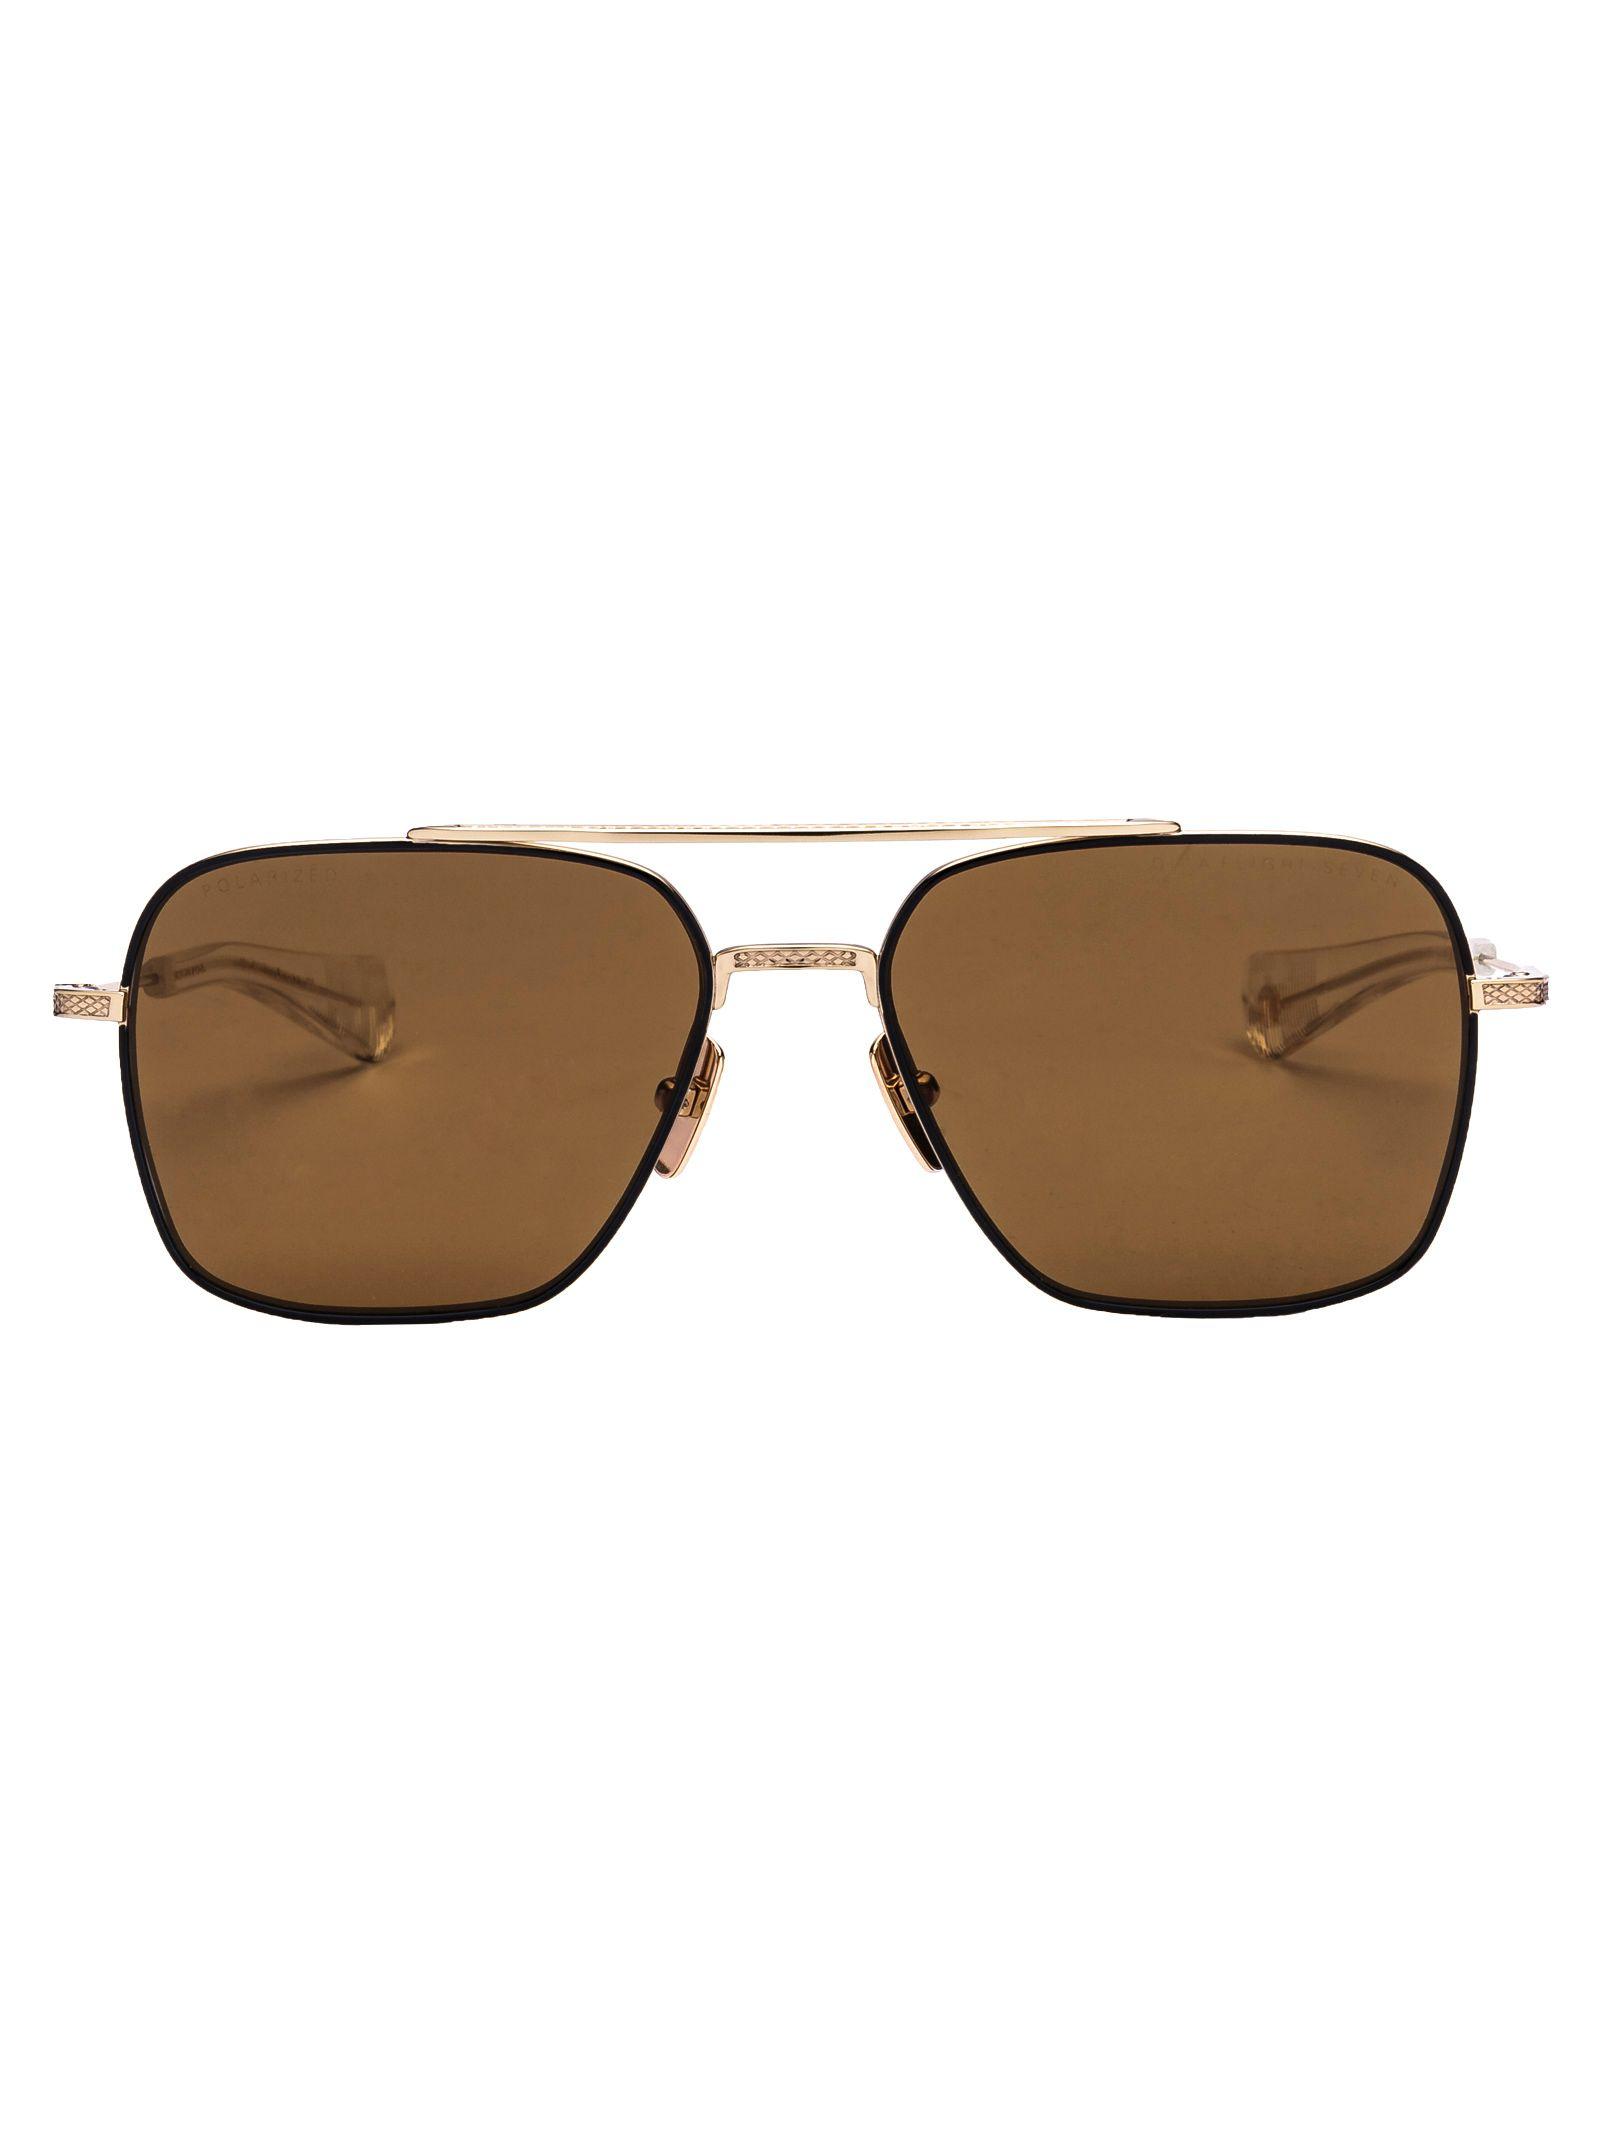 Dita Eyewear Gold Metal Sunglasses in Metallic for Men - Lyst